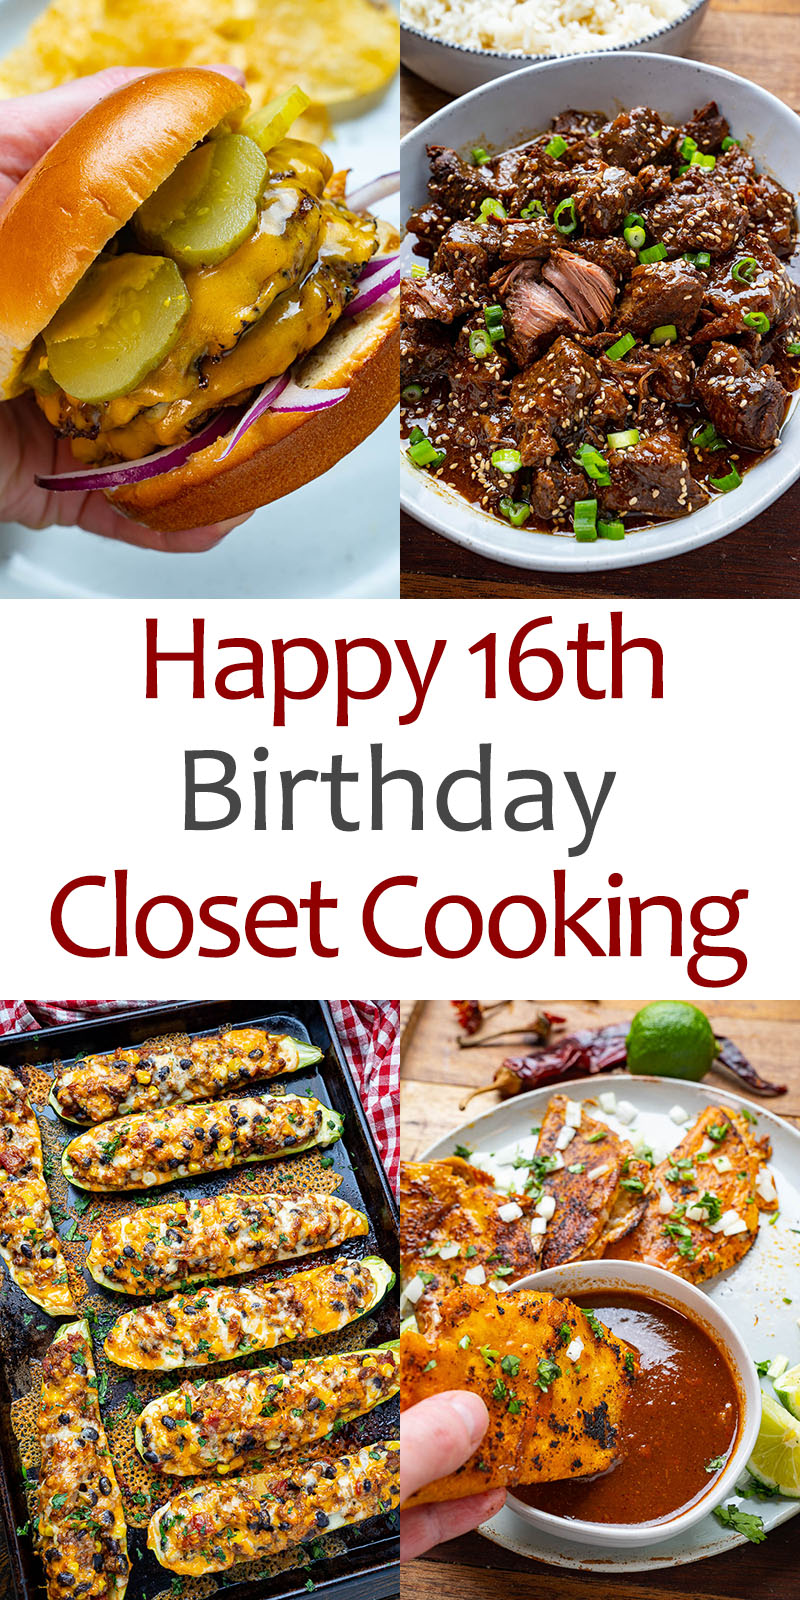 Happy 16th Birthday Closet Cooking!